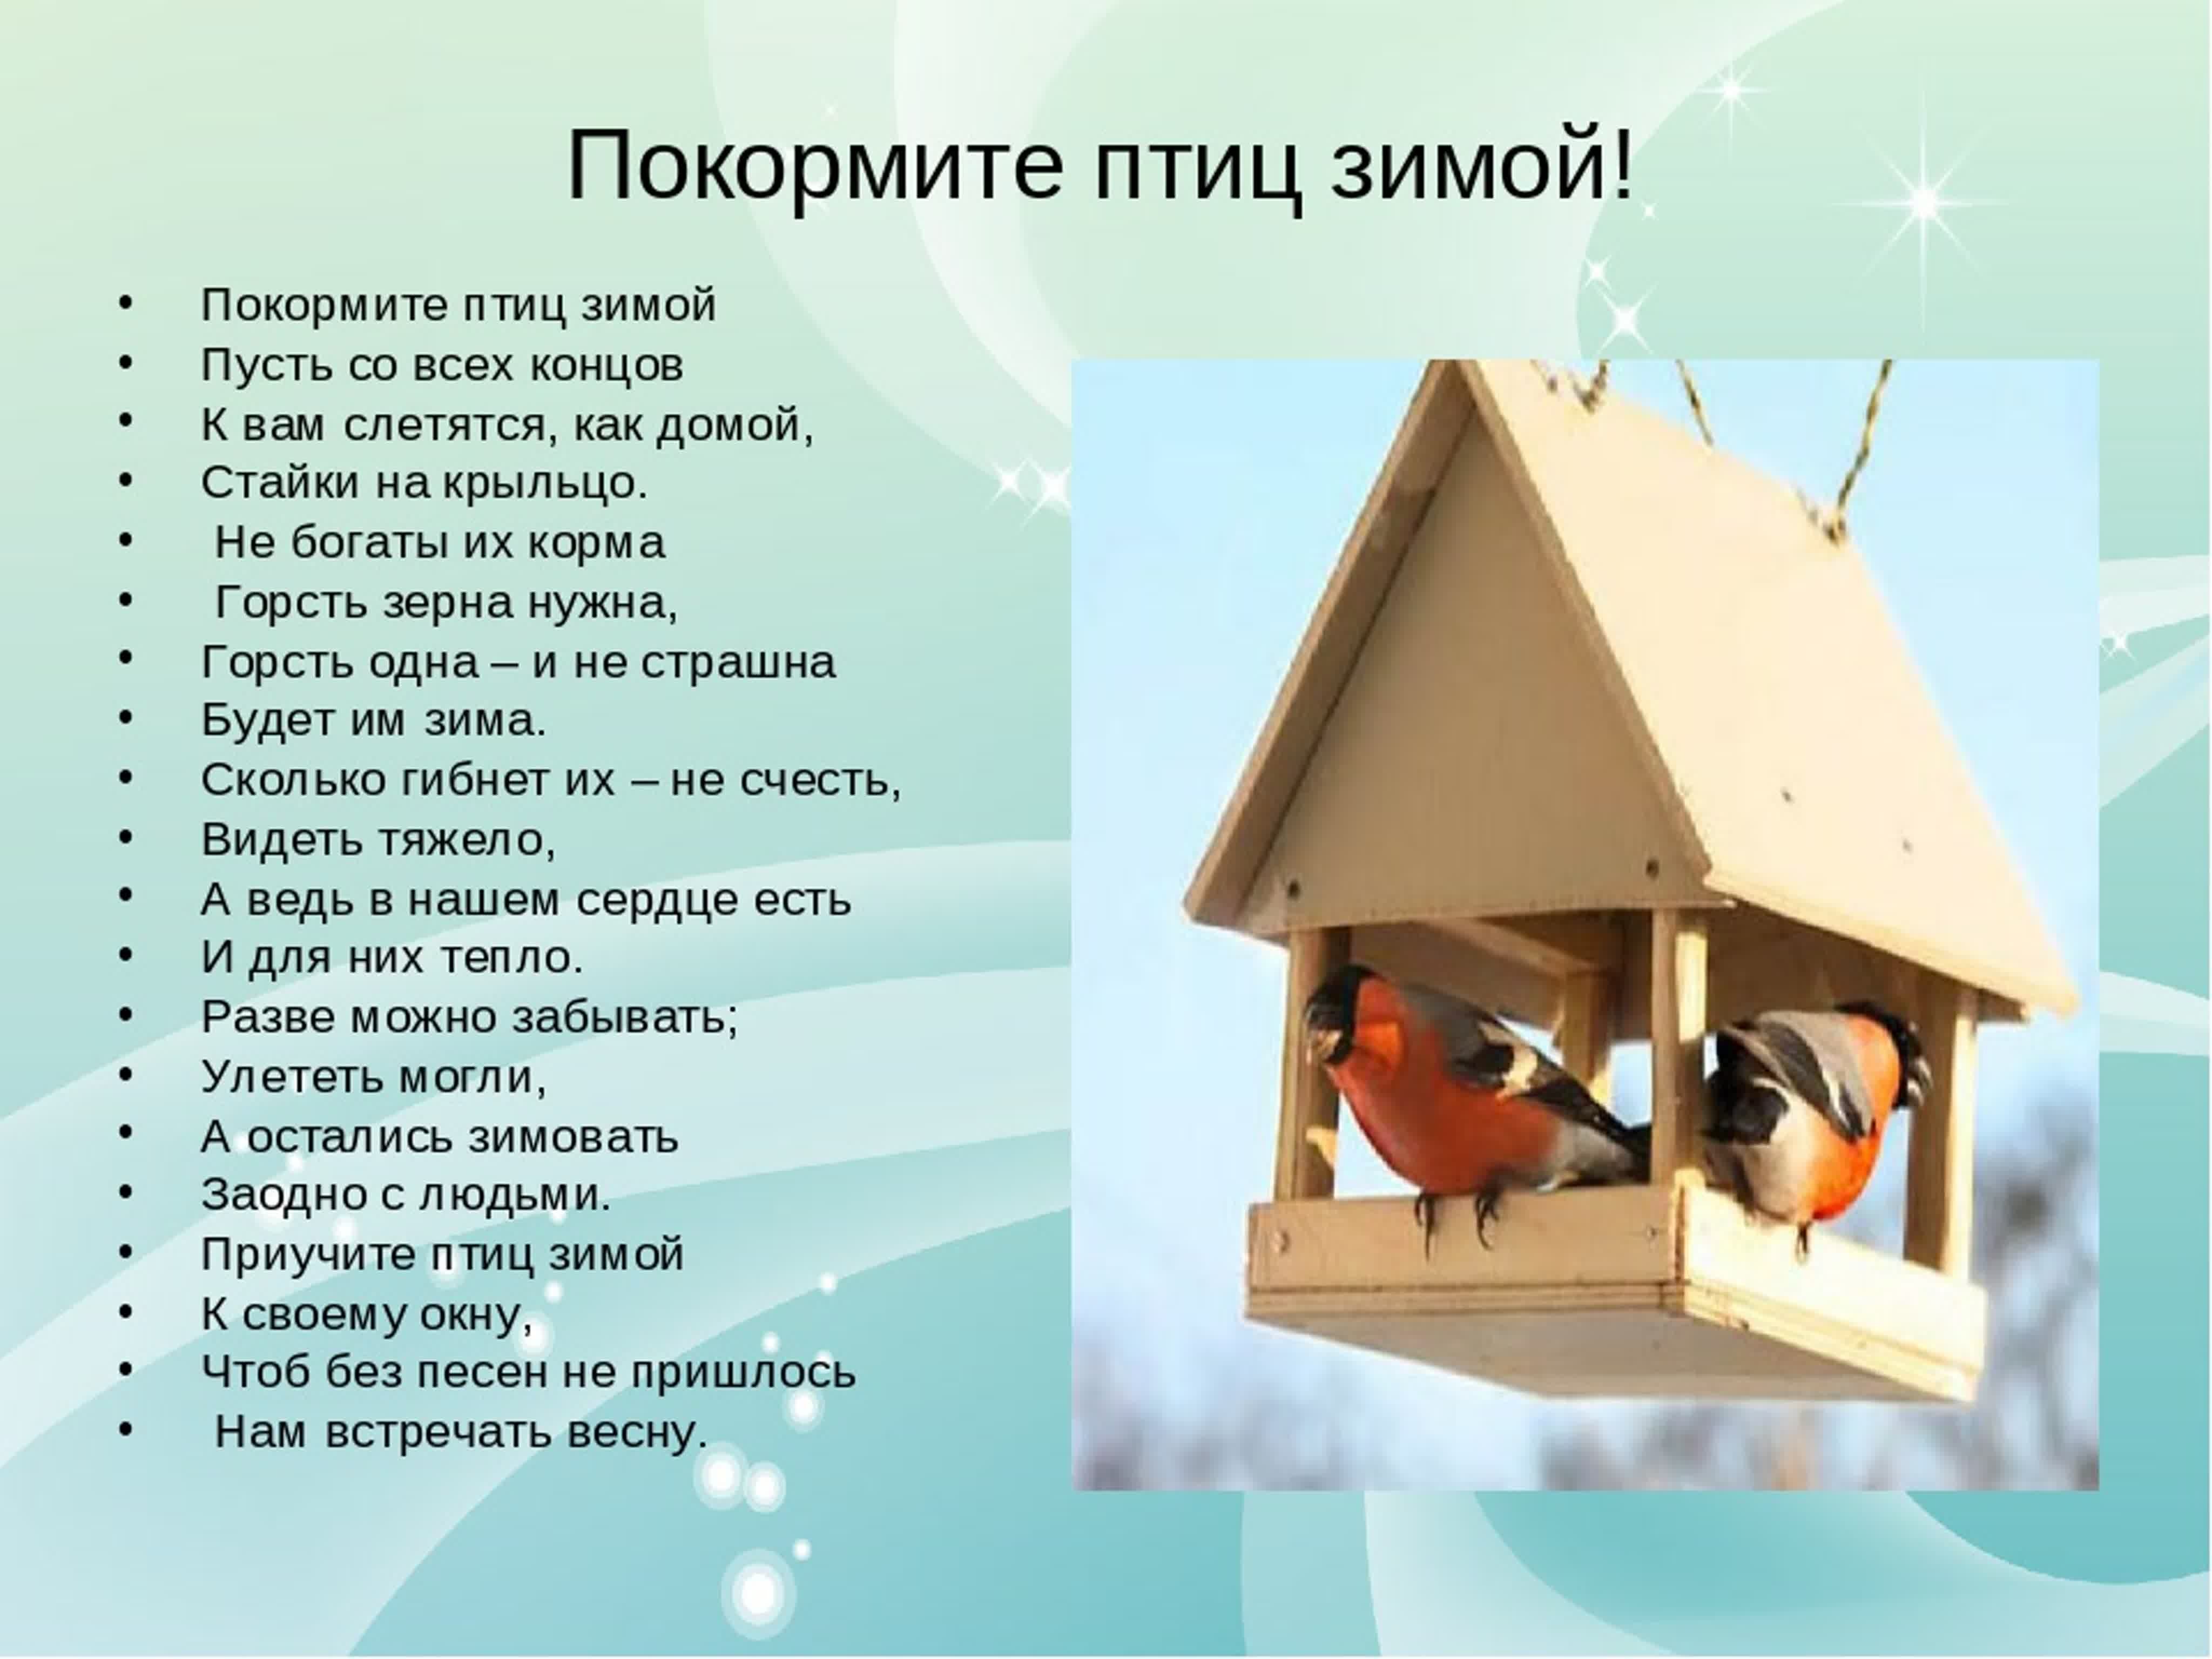 Защита и помощь человека птицам. Покормите птиц зимой. Покорми птиц зимой для дошкольников. Птицы зимой для детей. Кормушка для птиц.